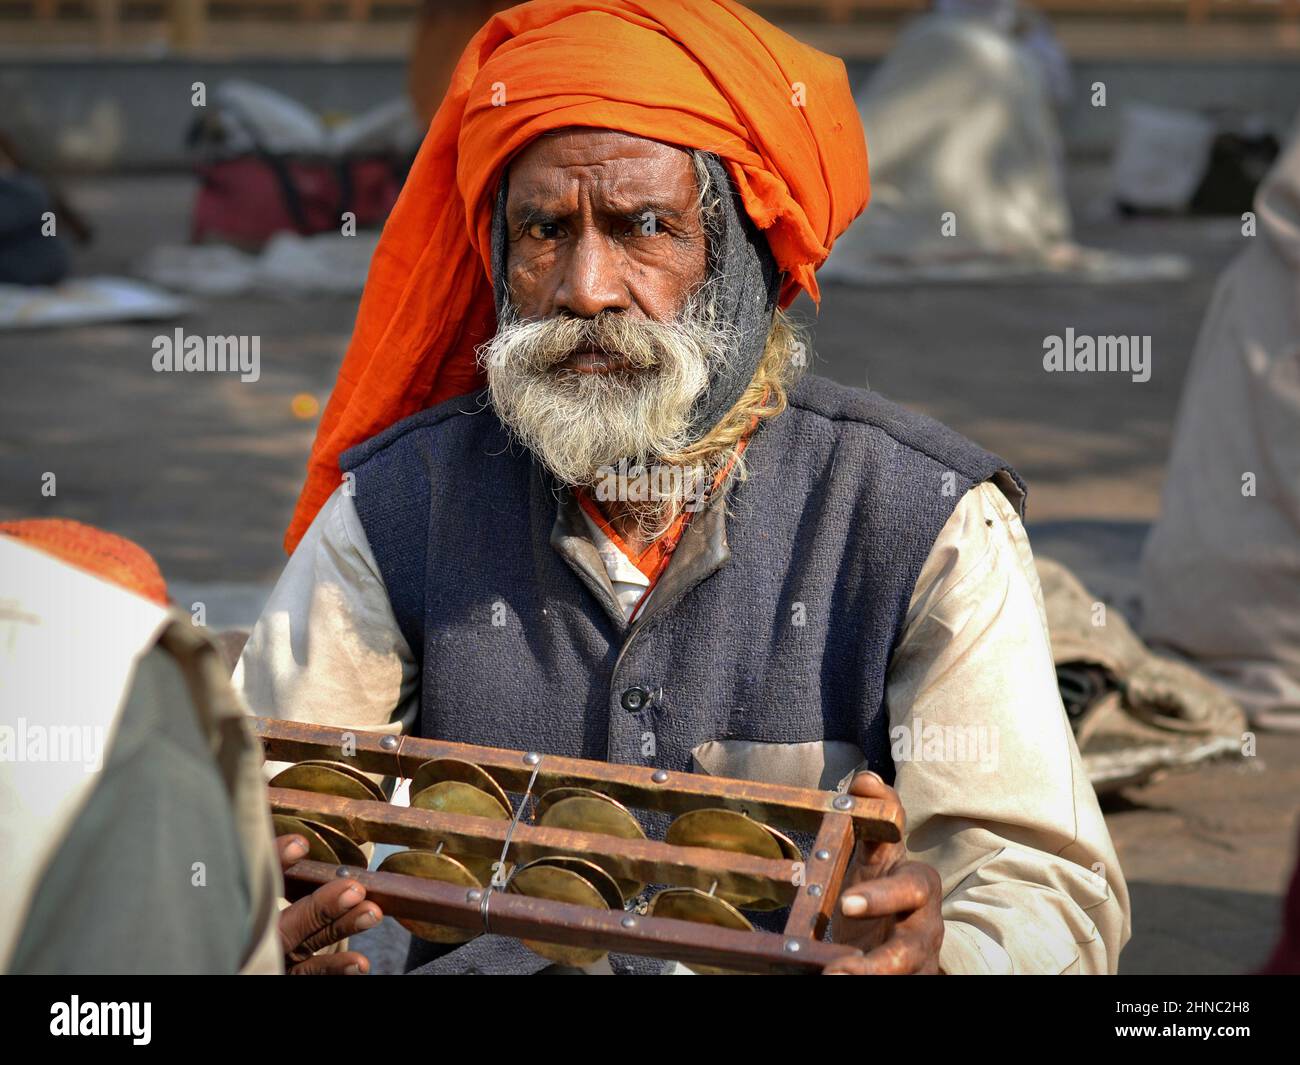 Old Indian temple musician with handmade jheeka (rectangular Indian tambourine) plays his instrument and sings at the Hindu Ram Raja Mandir temple. Stock Photo